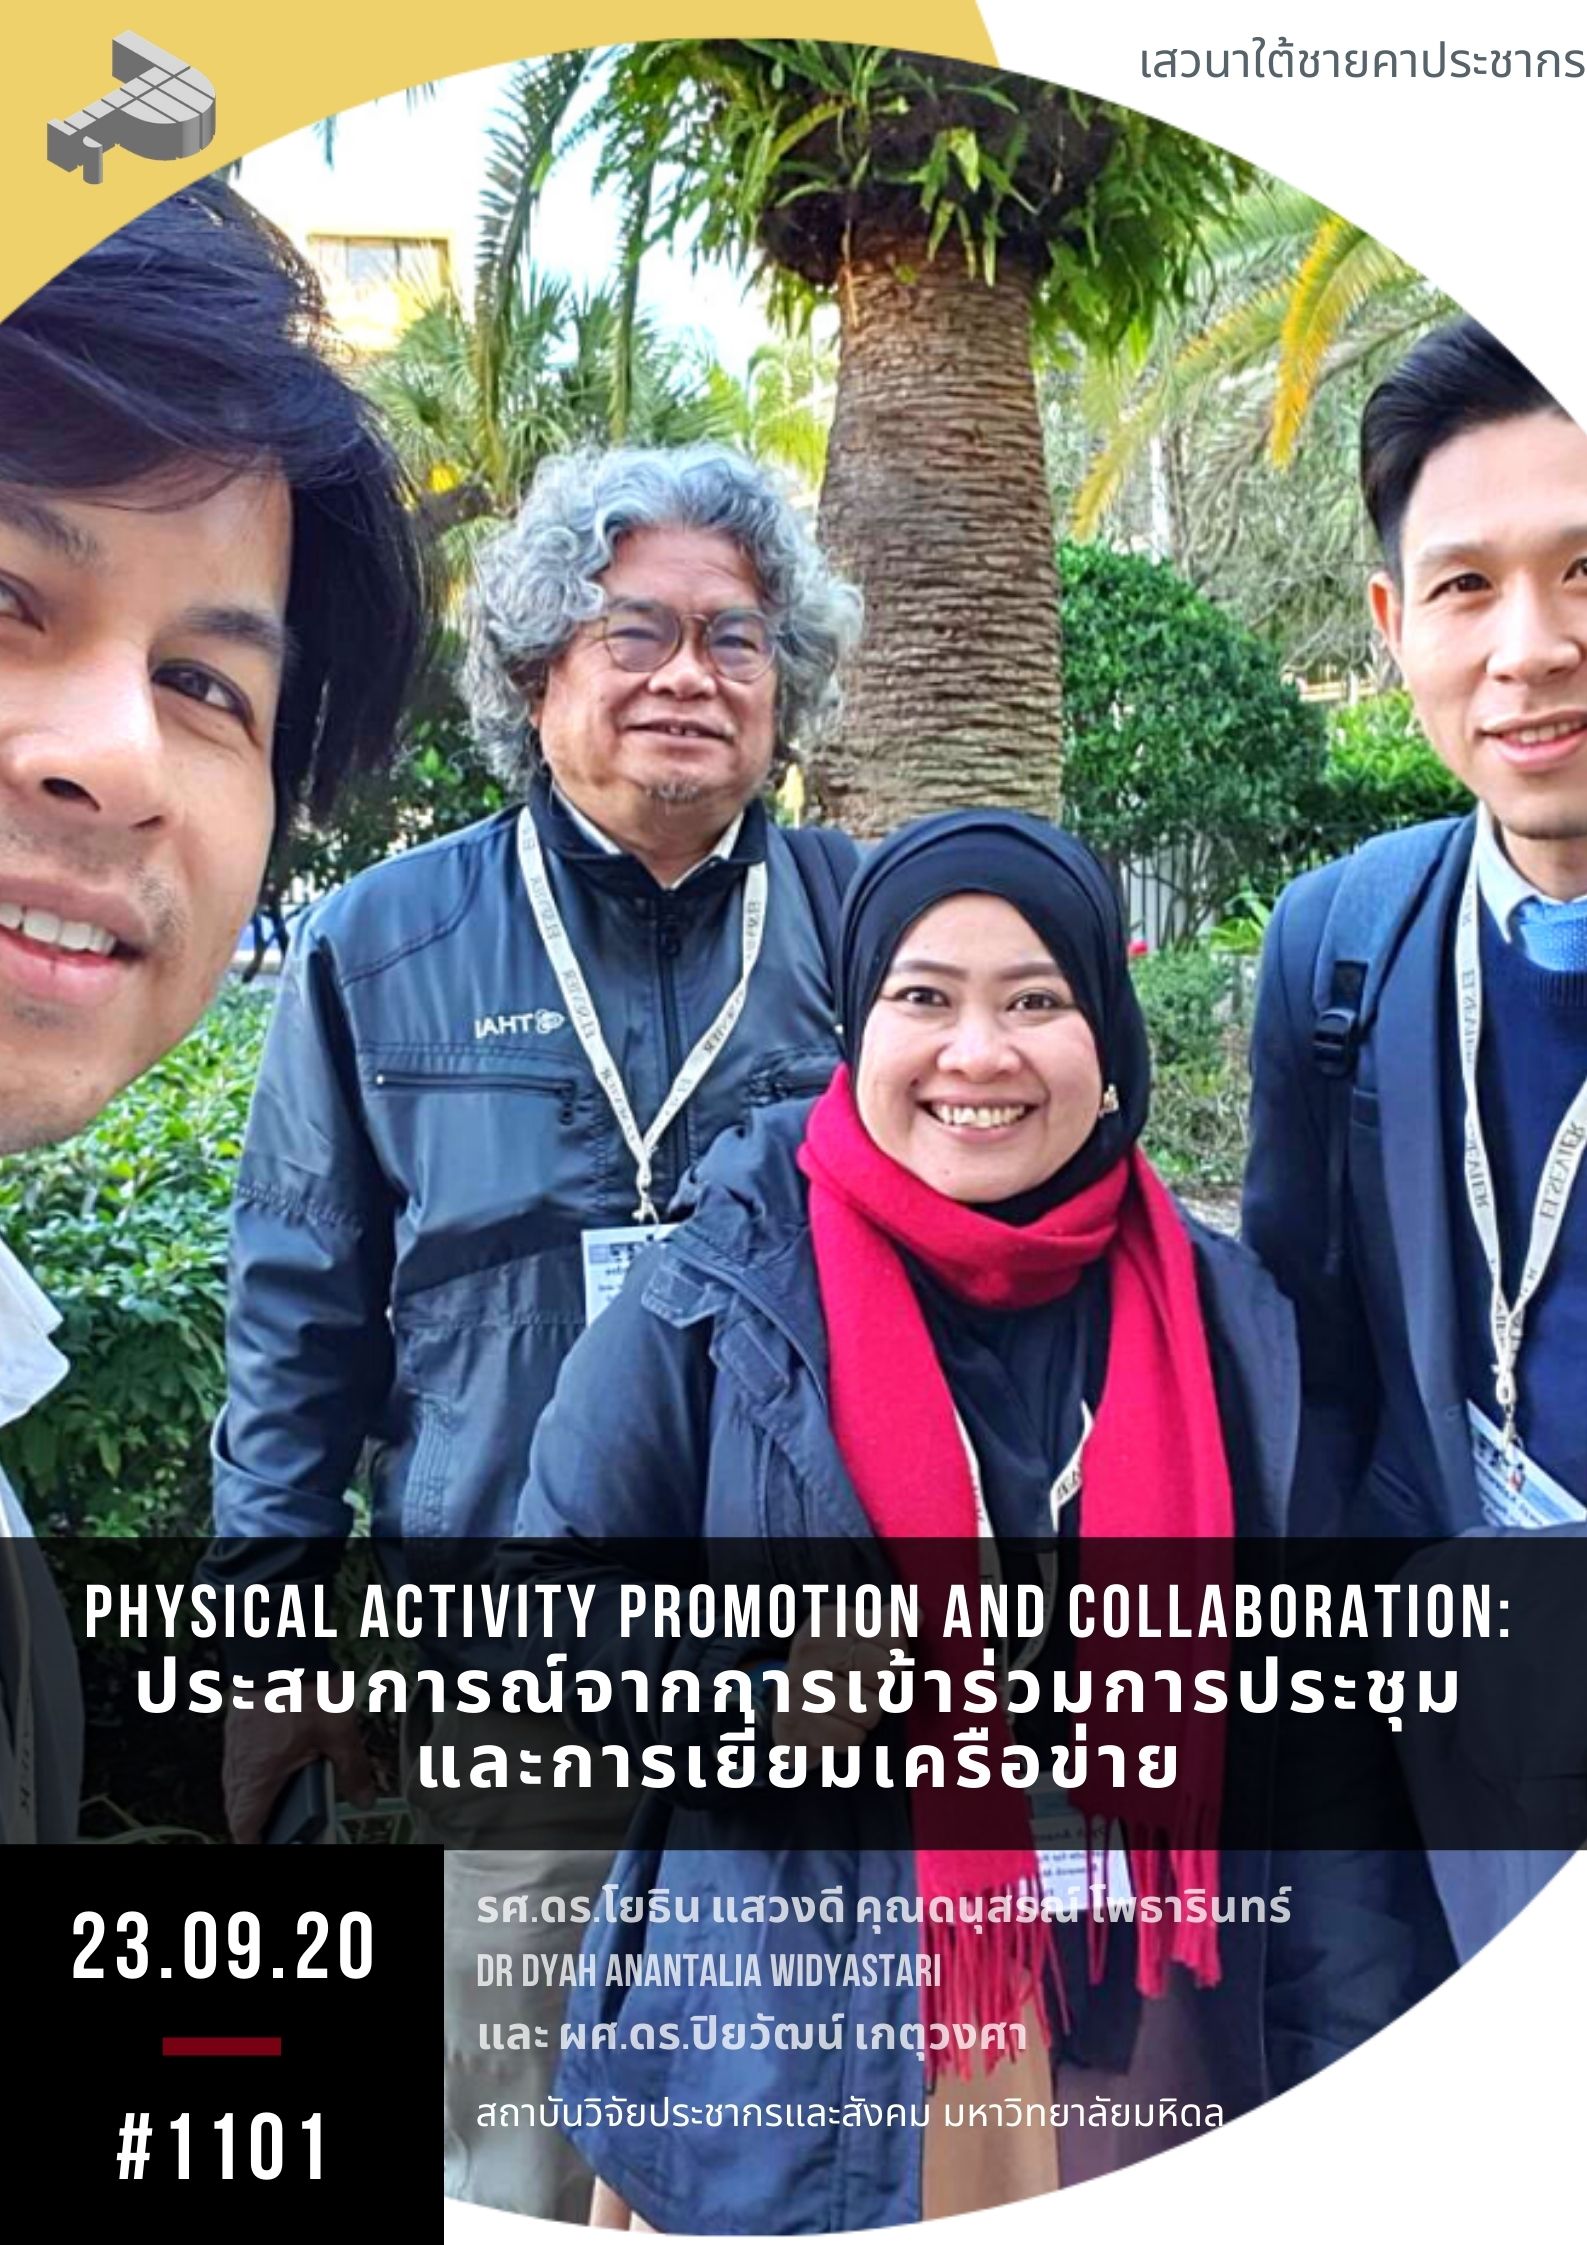 Physical Activity Promotion and Collaboration: ประสบการณ์จากการเดินทางเข้าร่วมการประชุมและการเยี่ยมเครือข่าย